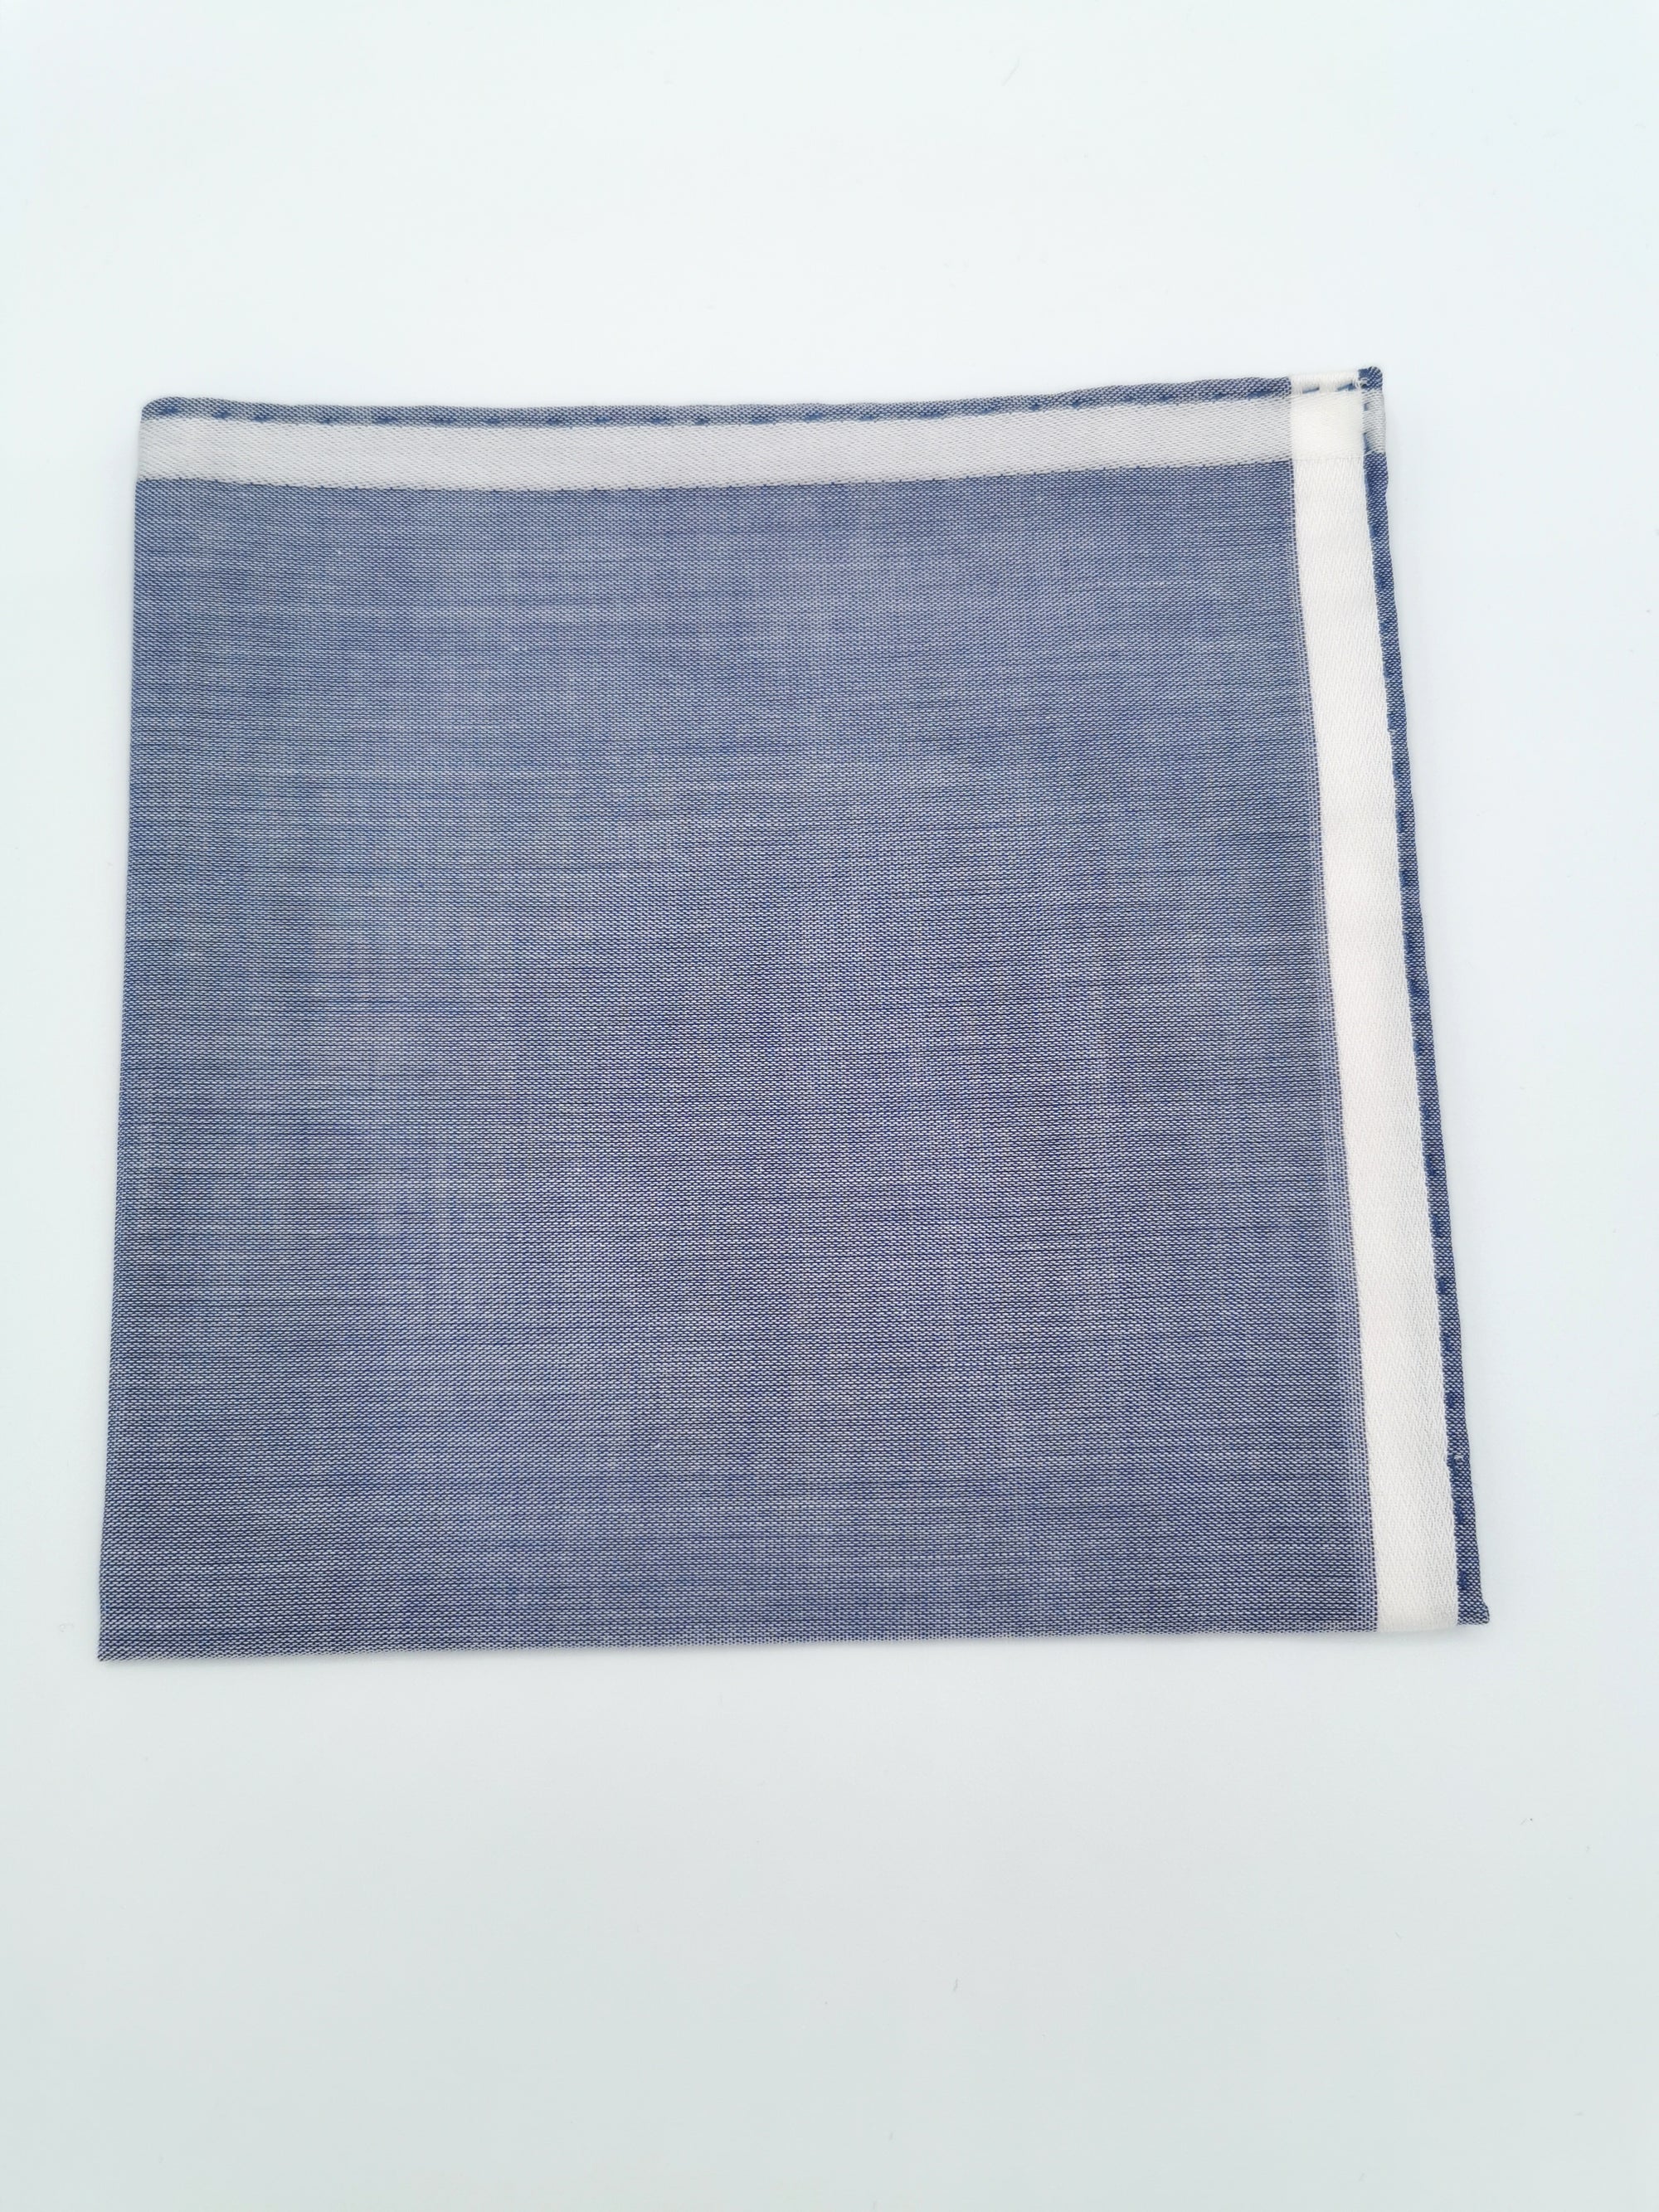 Simonnot-Godard blue pocket square with white satin border